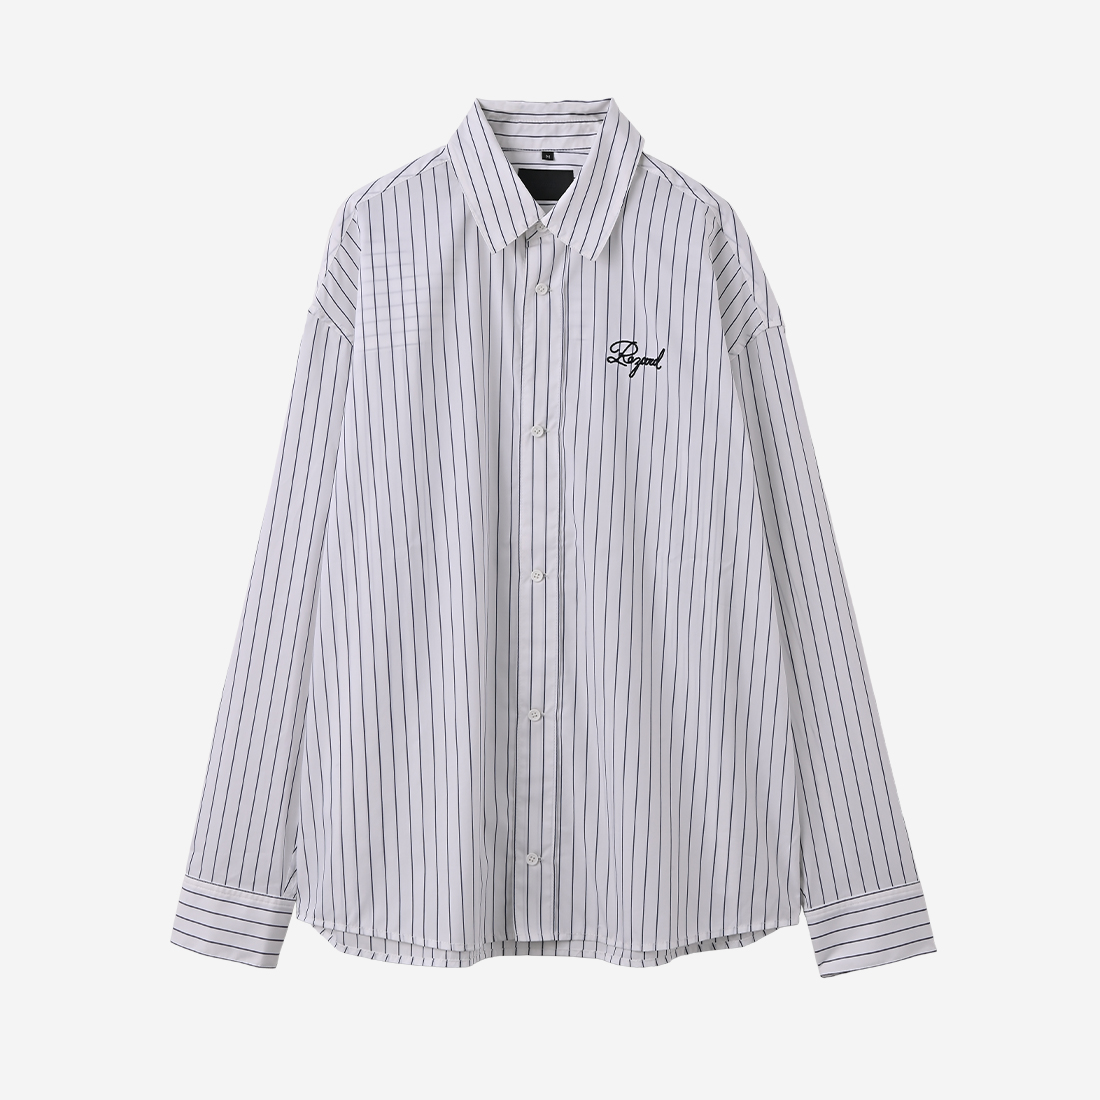 【ReZARD】Long Sleeve Stripe Shirts(White)